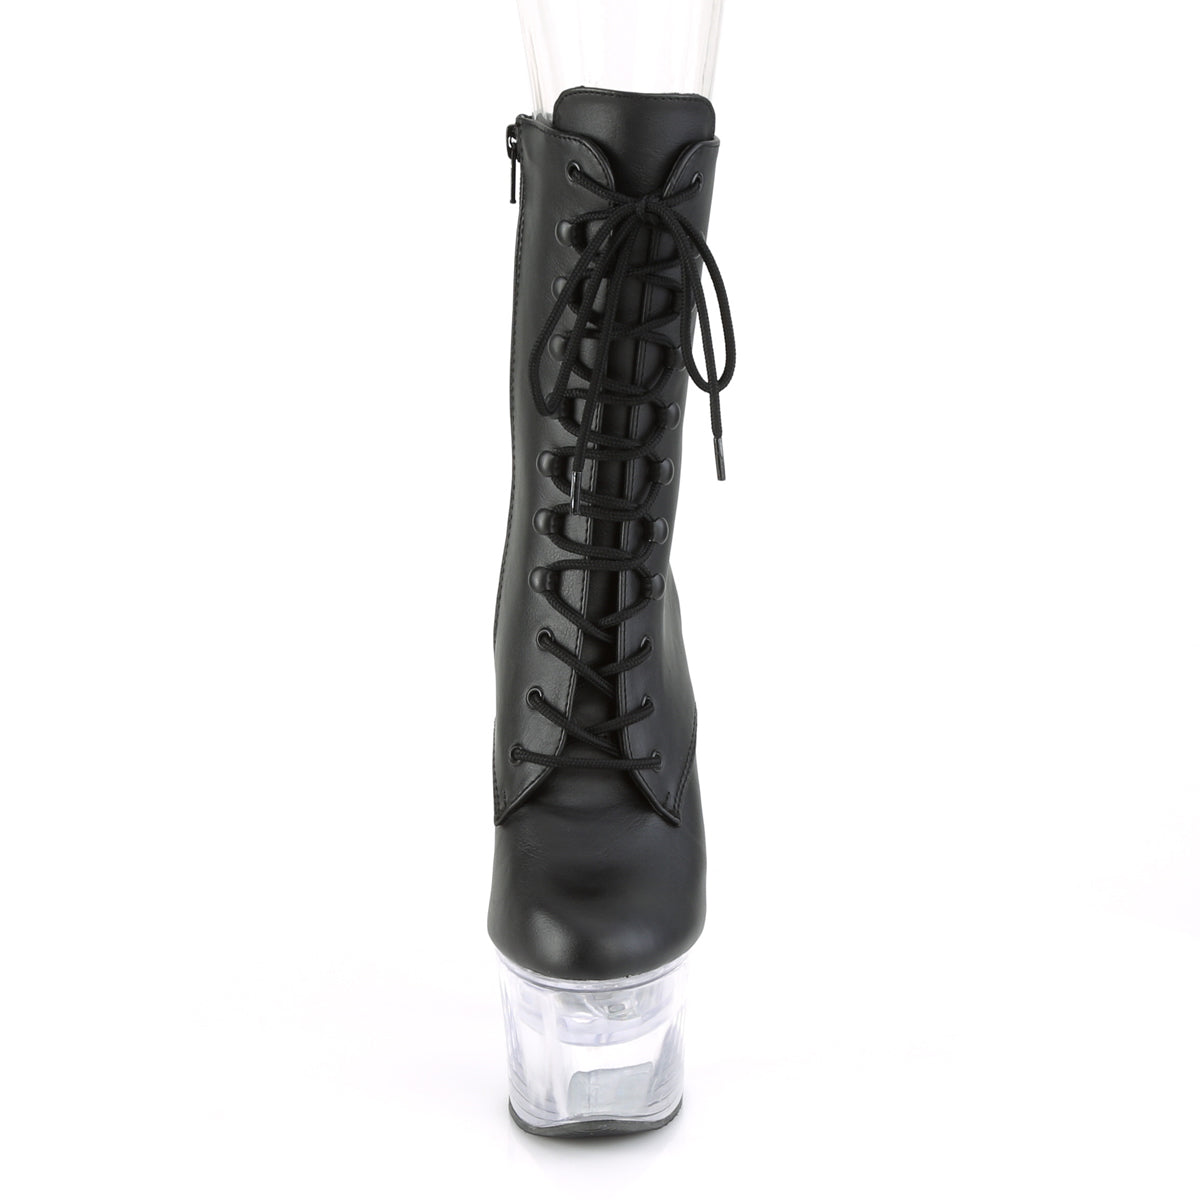 FLASHDANCE-1020-7 7" Heel Black Pole Dancing Platforms-Pleaser- Sexy Shoes Alternative Footwear